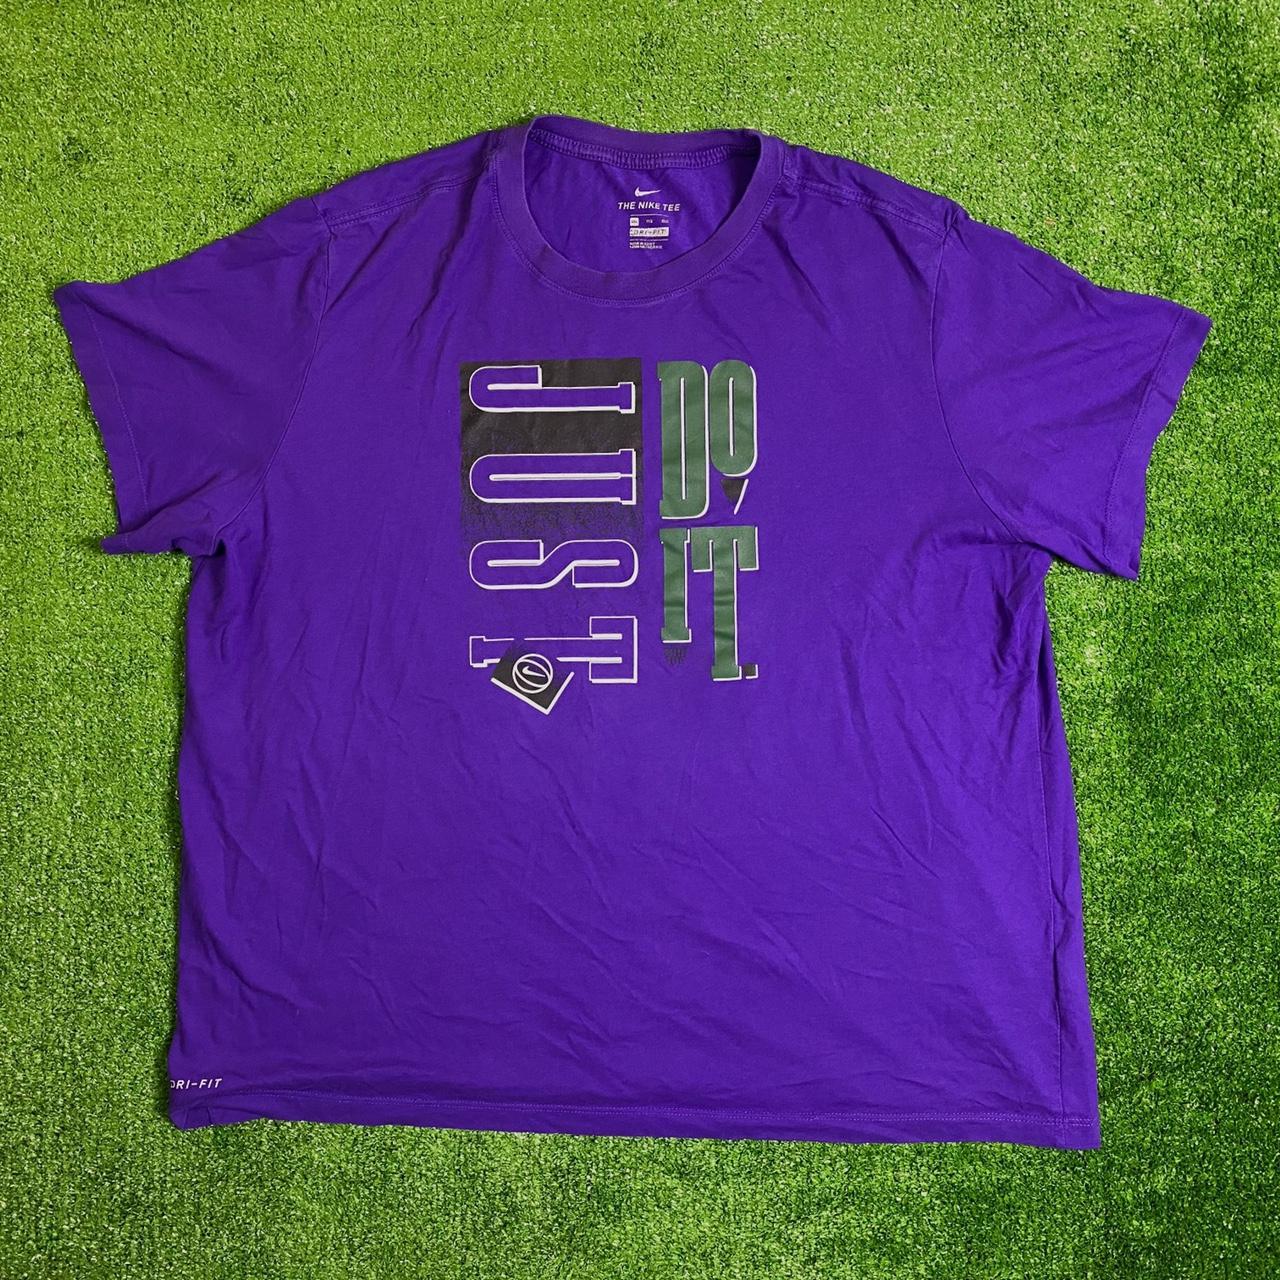 Nike Men's T-Shirt - Purple - XXL